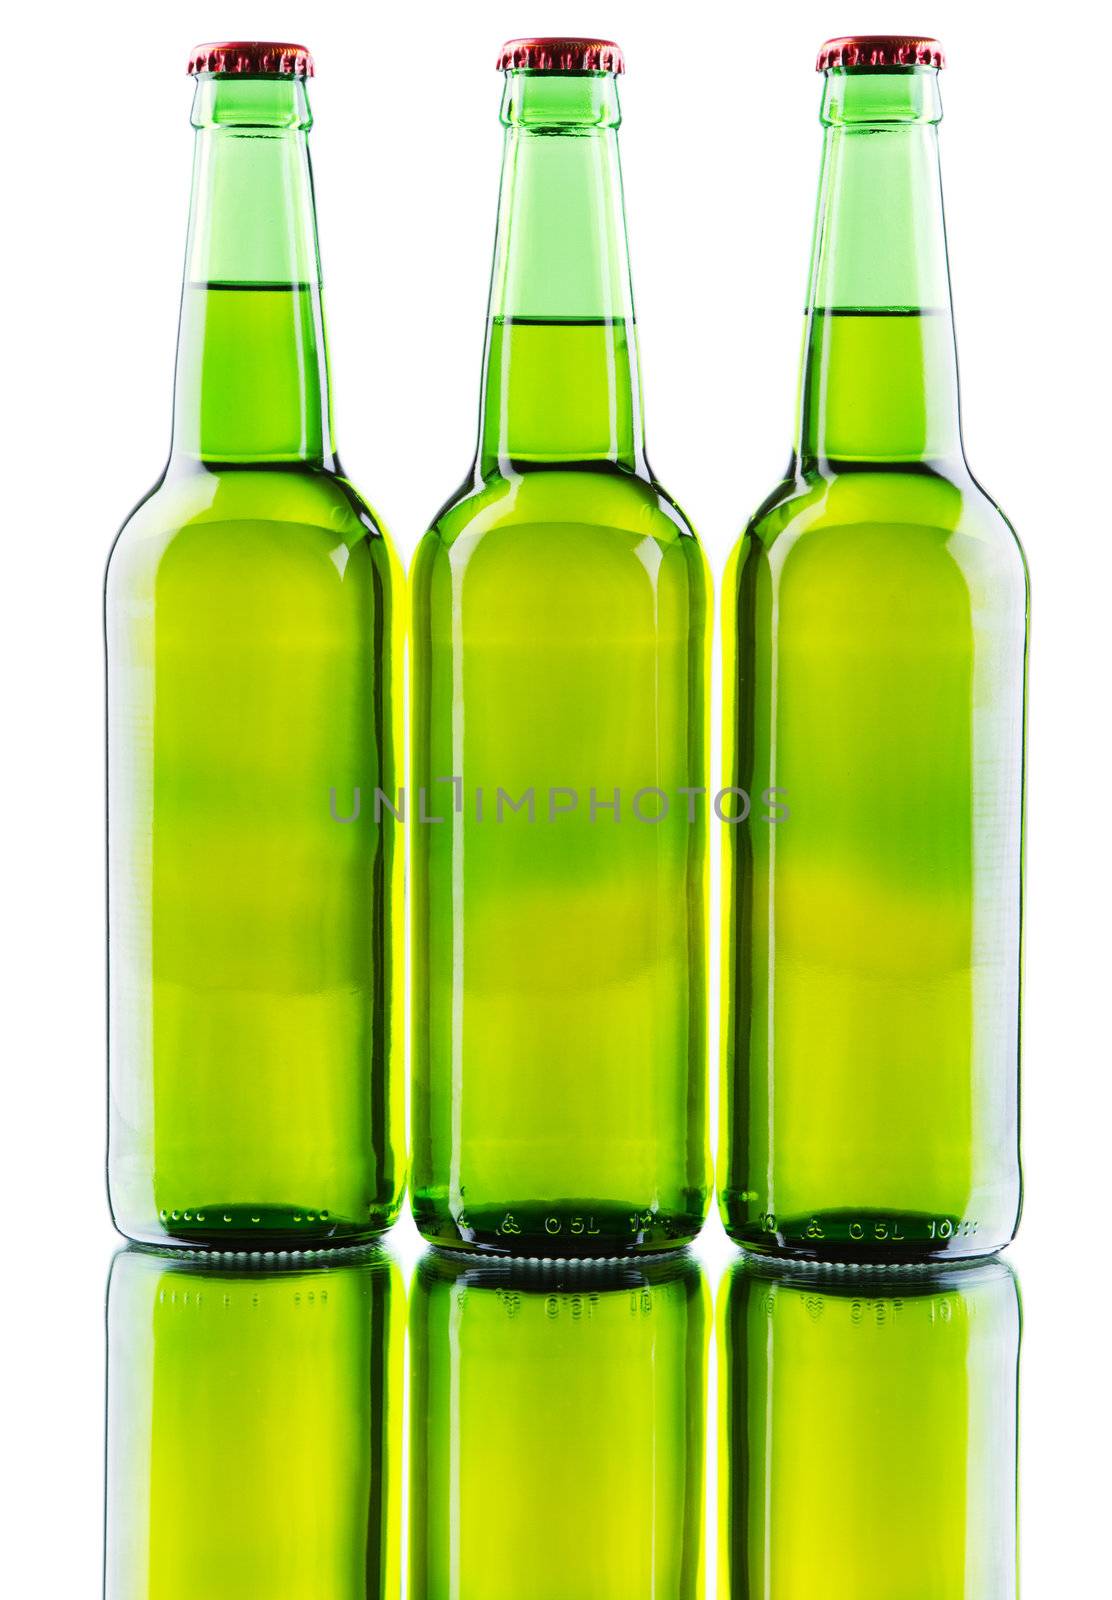 Beer bottles isolated on white background by Gdolgikh